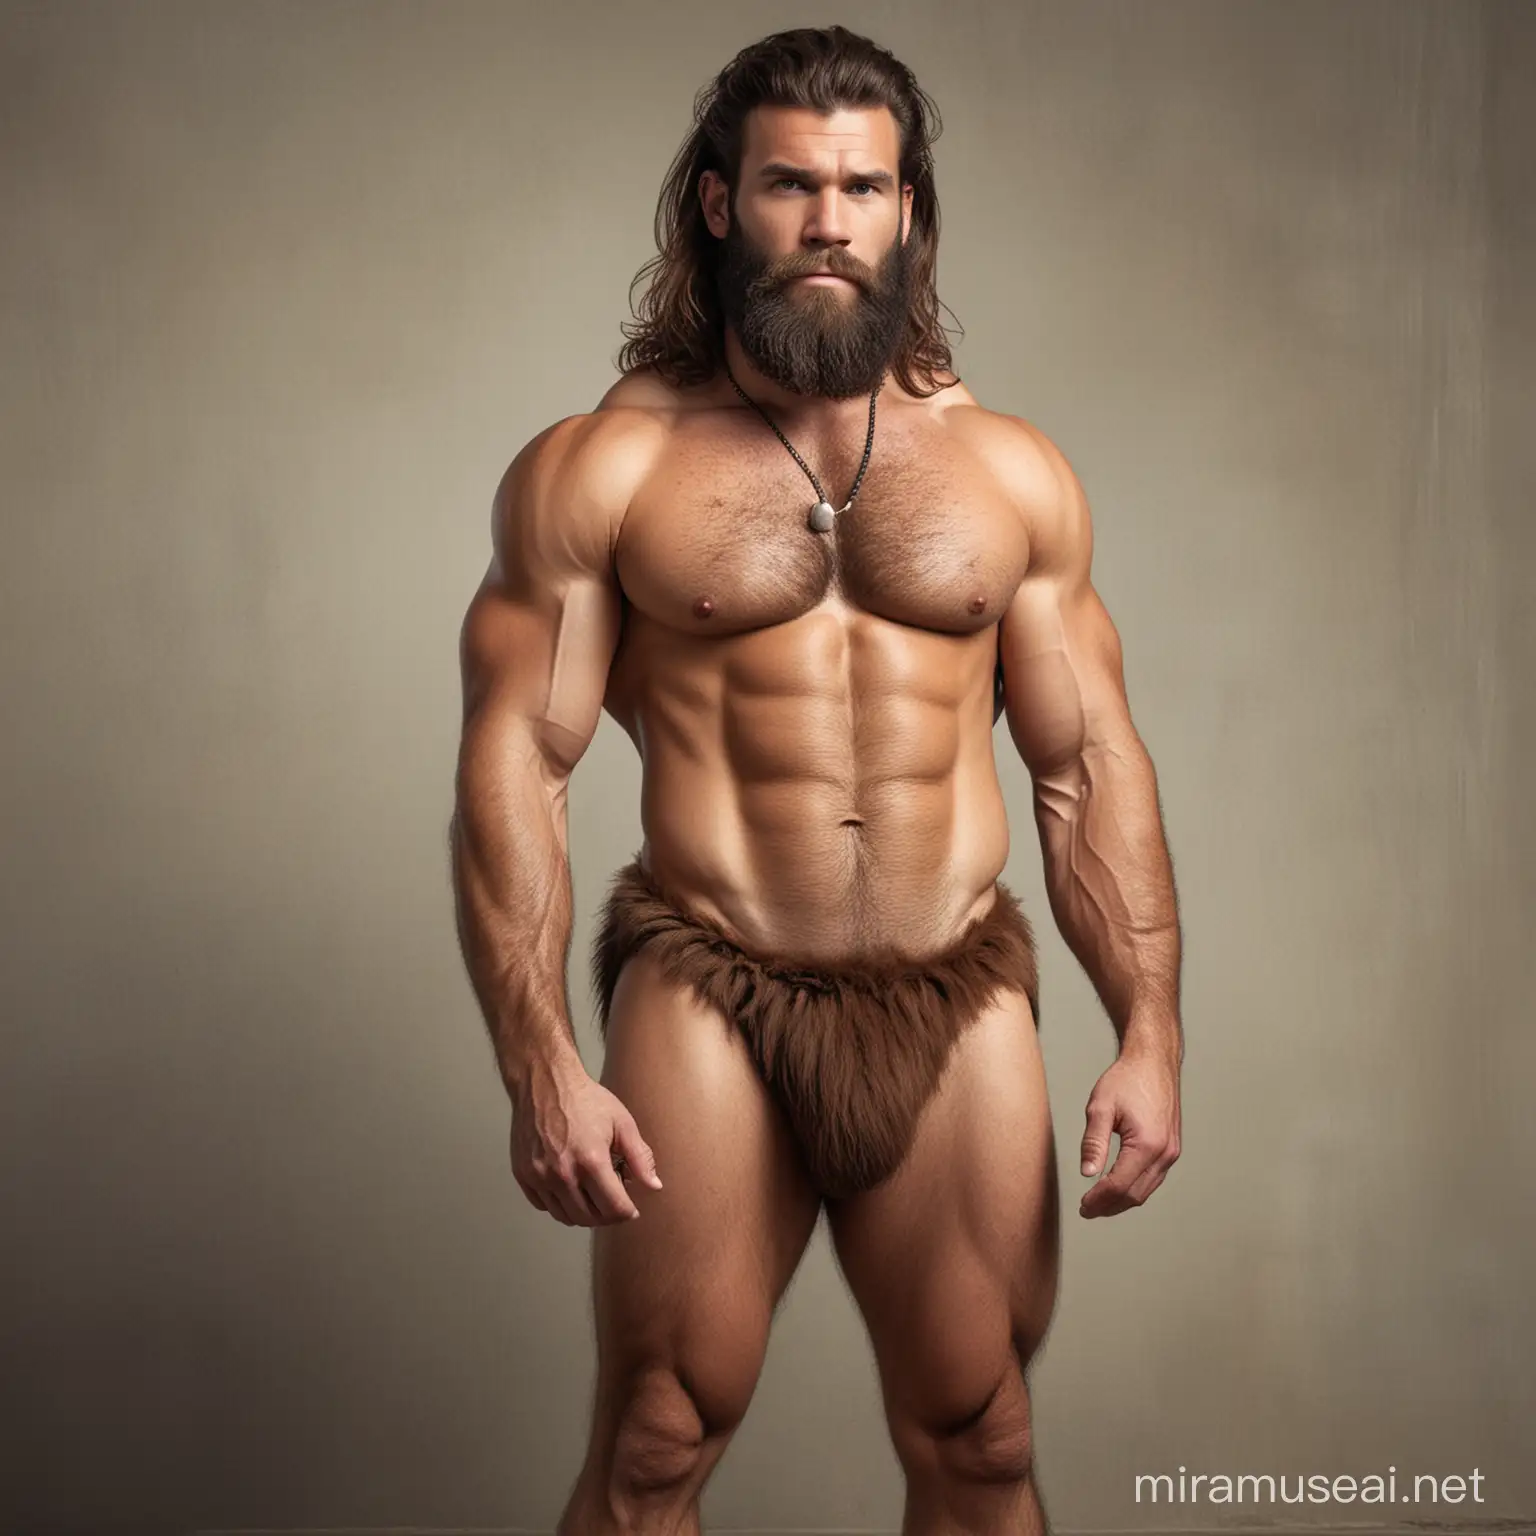 Muscular Caveman Stands Alongside Meek Human